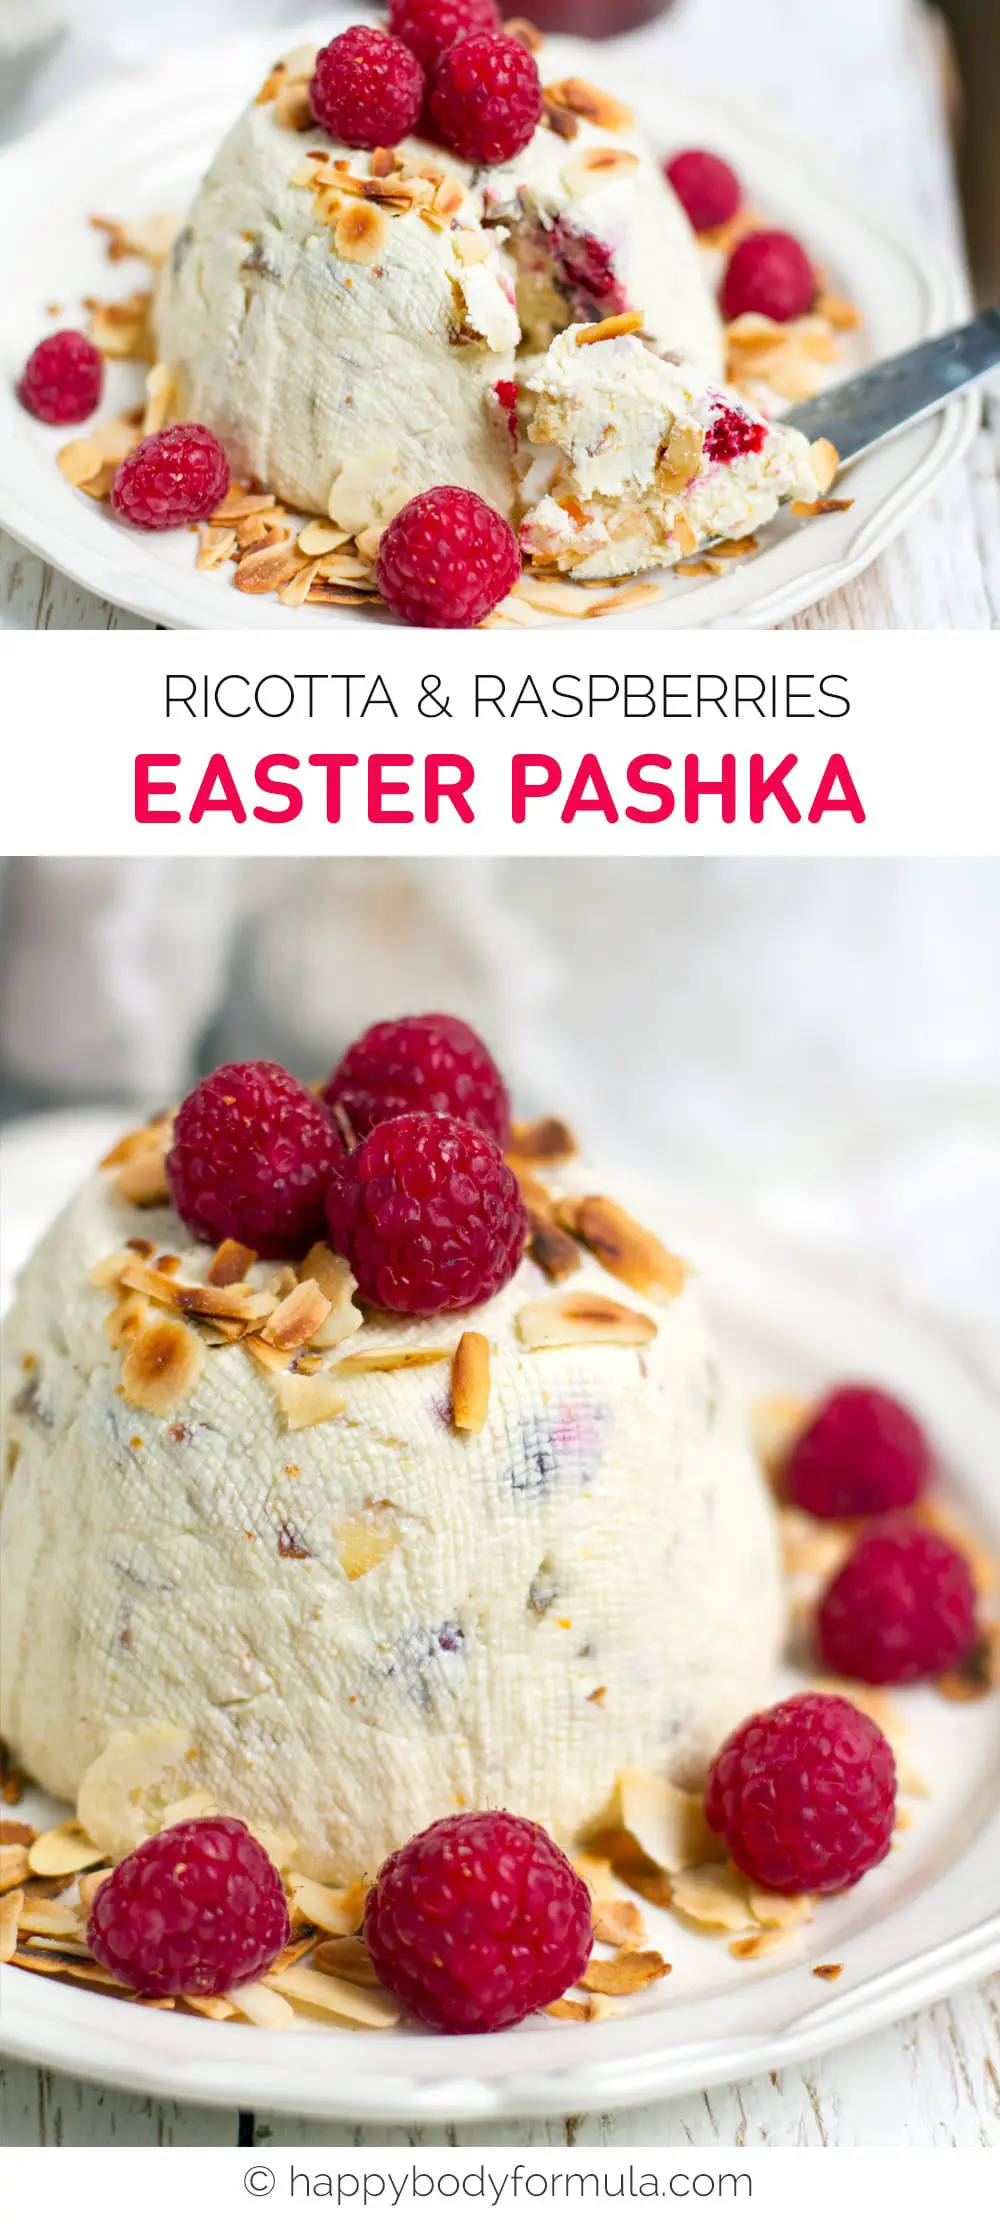 Ricotta & Raspberries Easter Pashka - perfect dessert that is gluten-free, grain-free and very nourishing